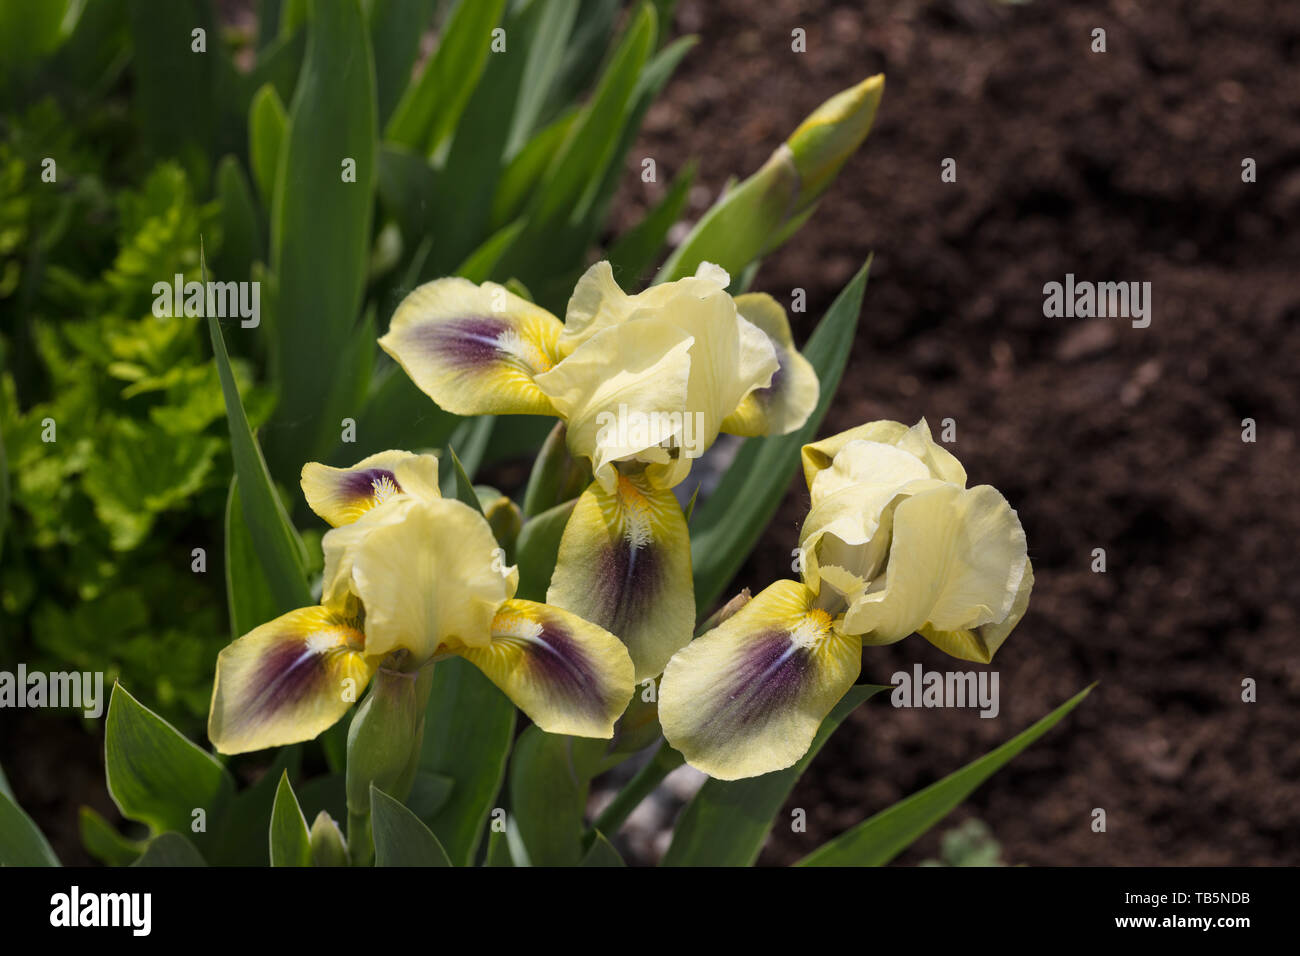 Iris histroides, Lady Beatrix Stanley - Burpee